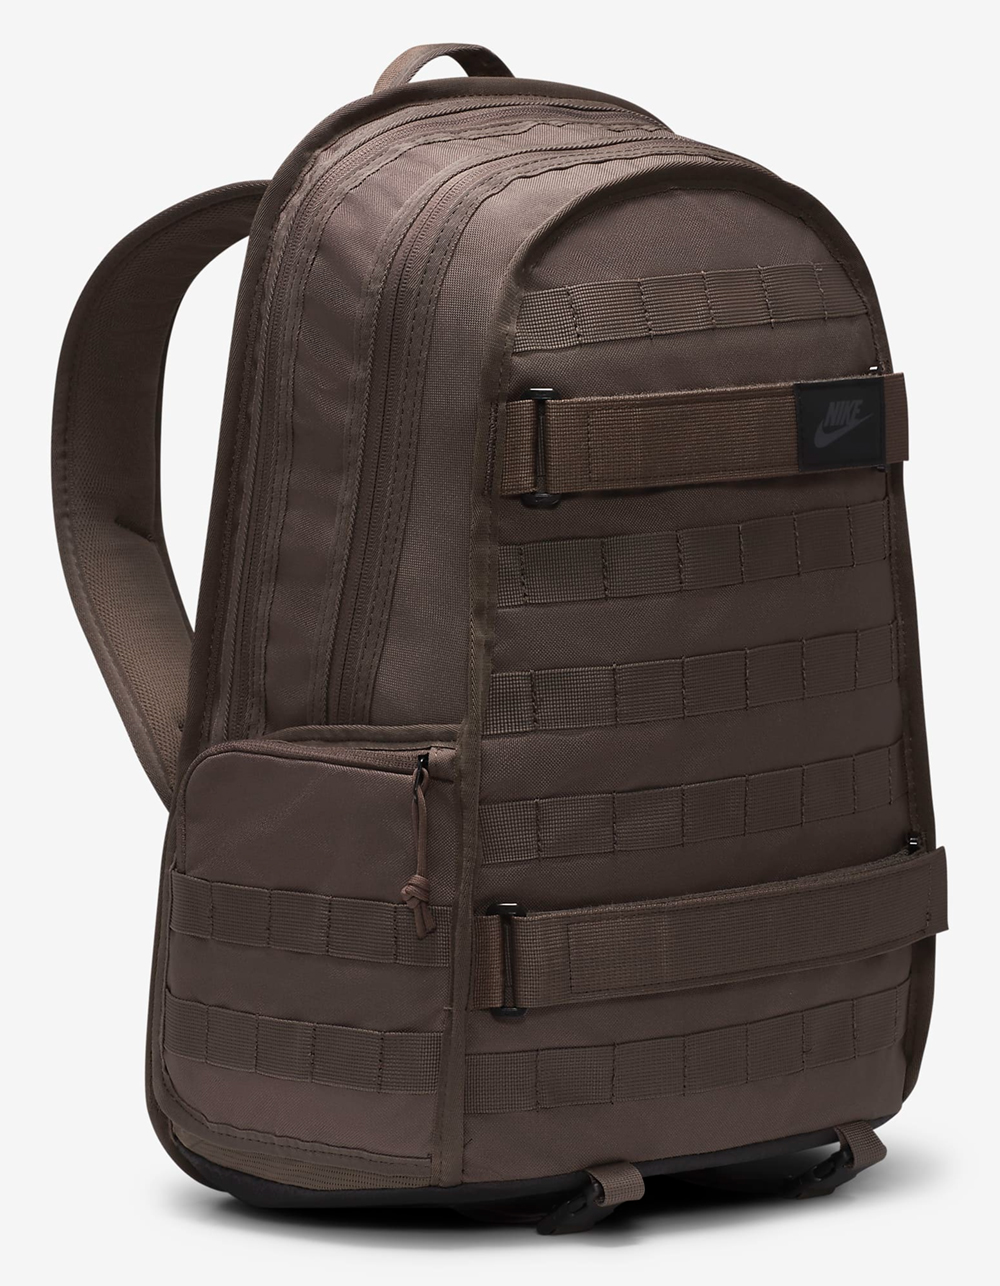 sac a dos Nike Rpm backpack - Miel / Noir / Blanc - Vegaskateshop